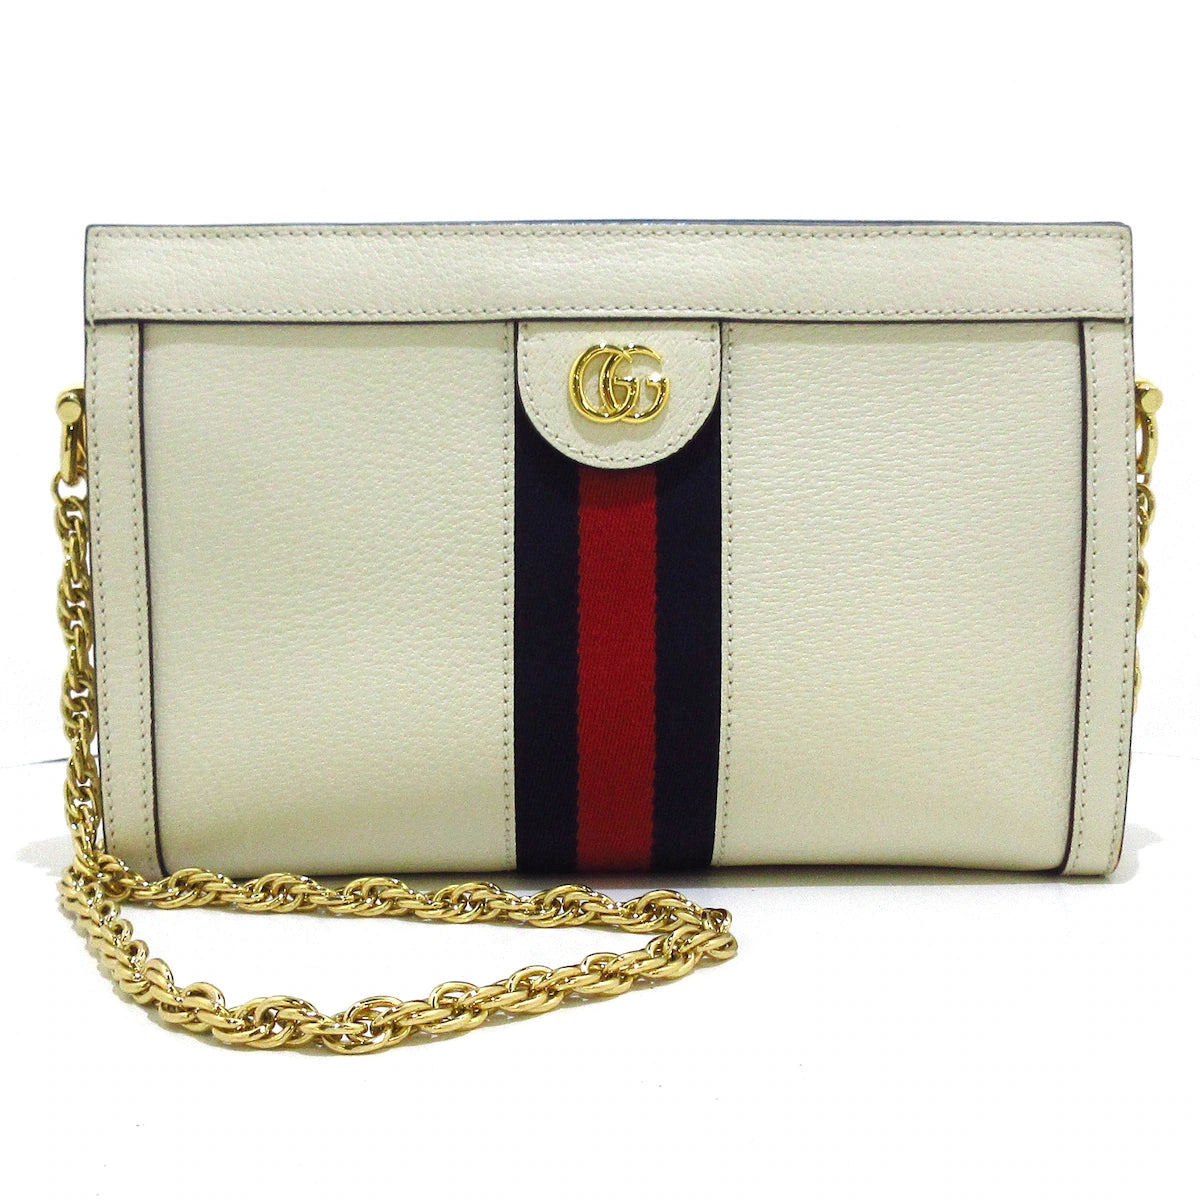 GUCCI - Ophidia GG Small Shoulder Bag Shoulder Bag White Navy Red PVC Leather